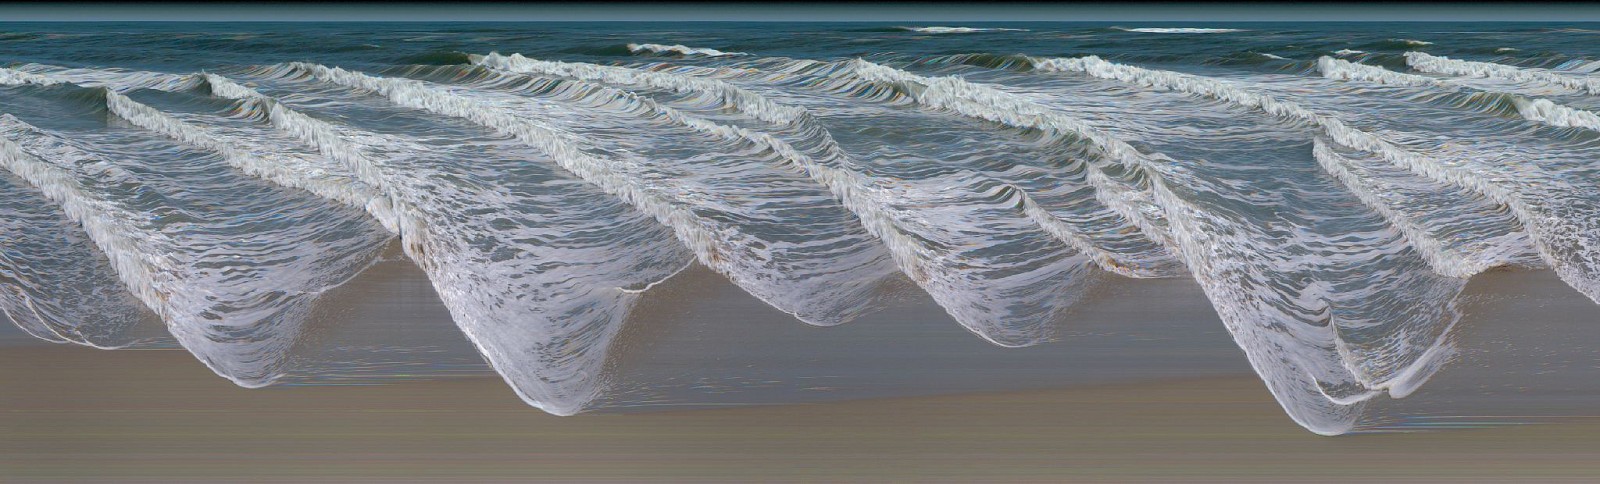 Jay Mark Johnson, VENICE BEACH WAVES 7, 2011 Venice Beach CA
archival pigment on paper, mounted on aluminum, 40 x 132 in. (101.6 x 335.3 cm)